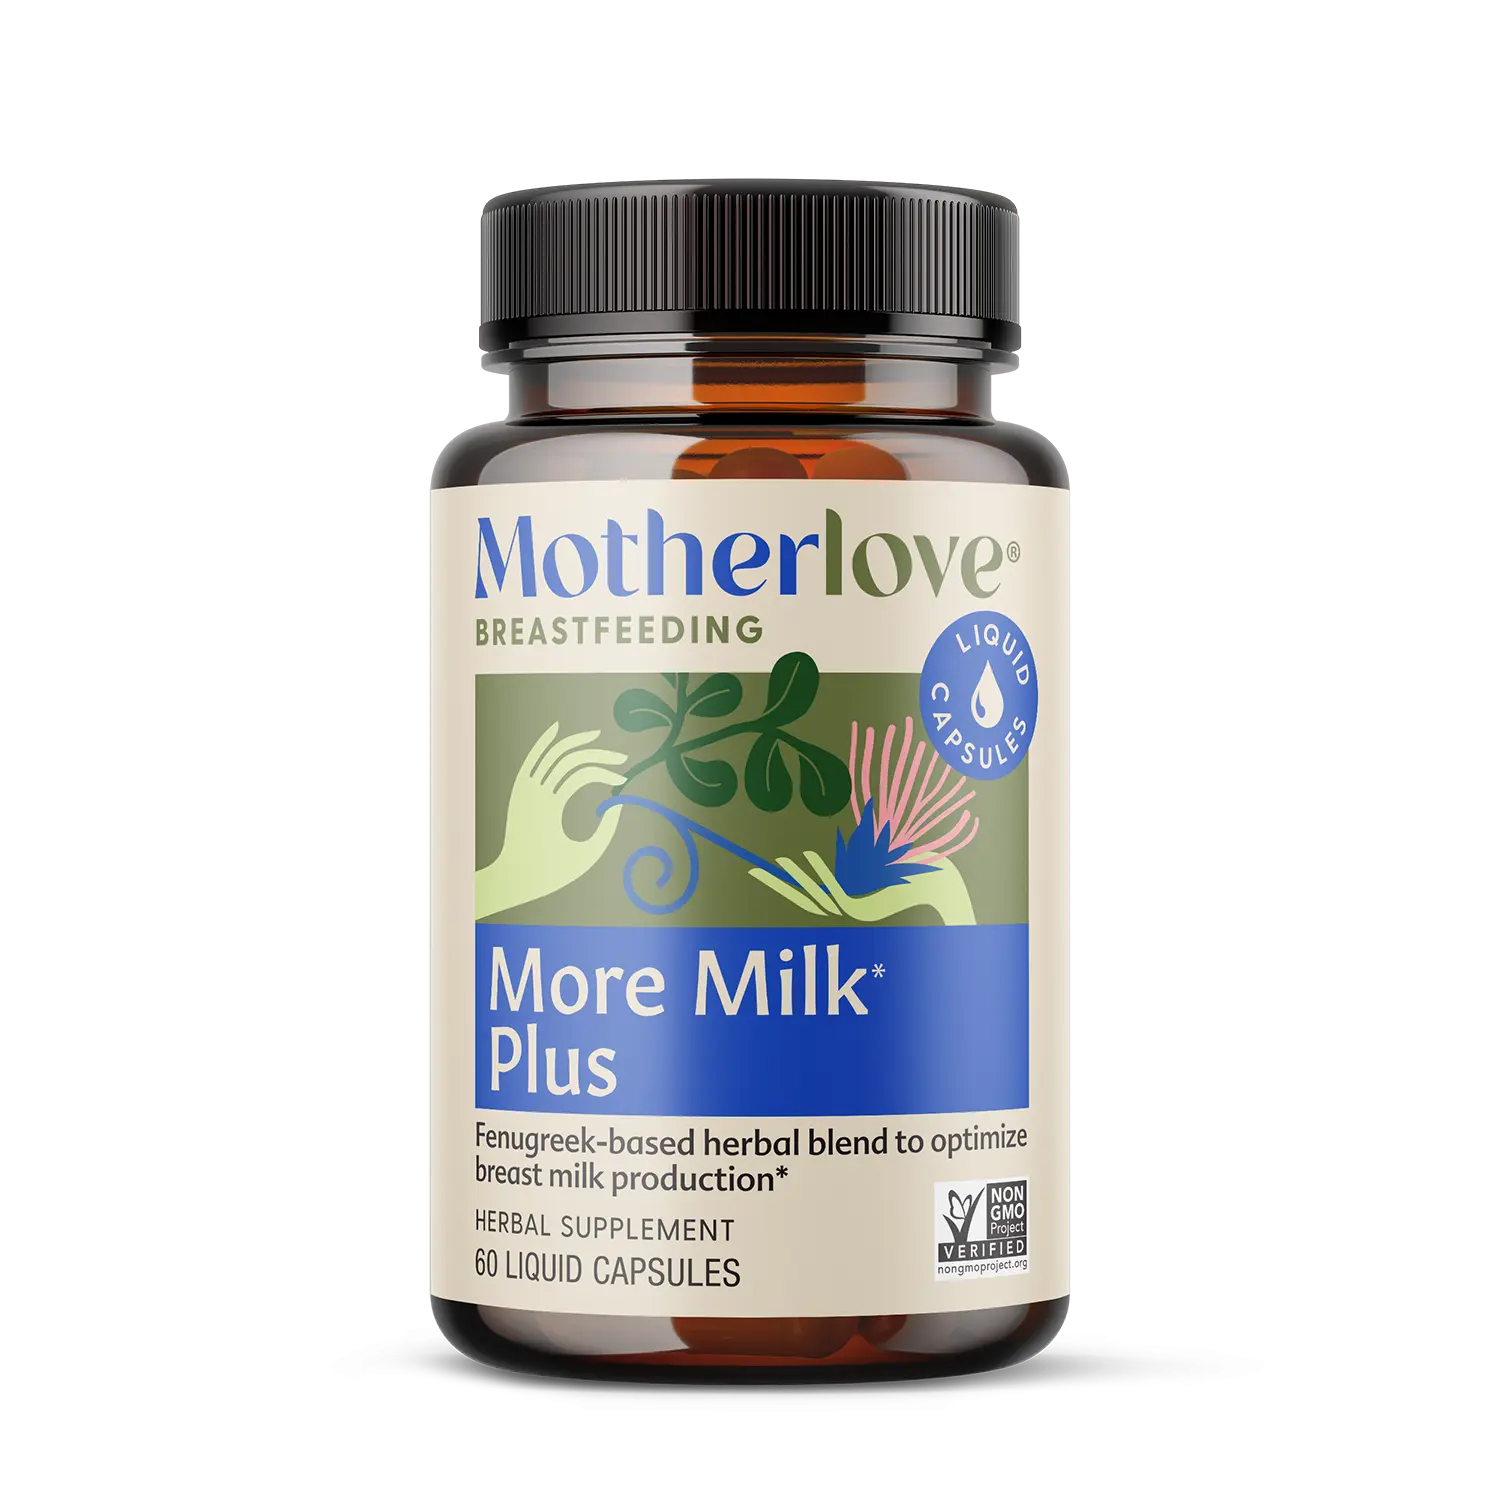 Motherlove More Milk Plus image from the front - Motherlove More Milk Plus flatlay image - the dairy fairy - motherlove - breastfeeding 